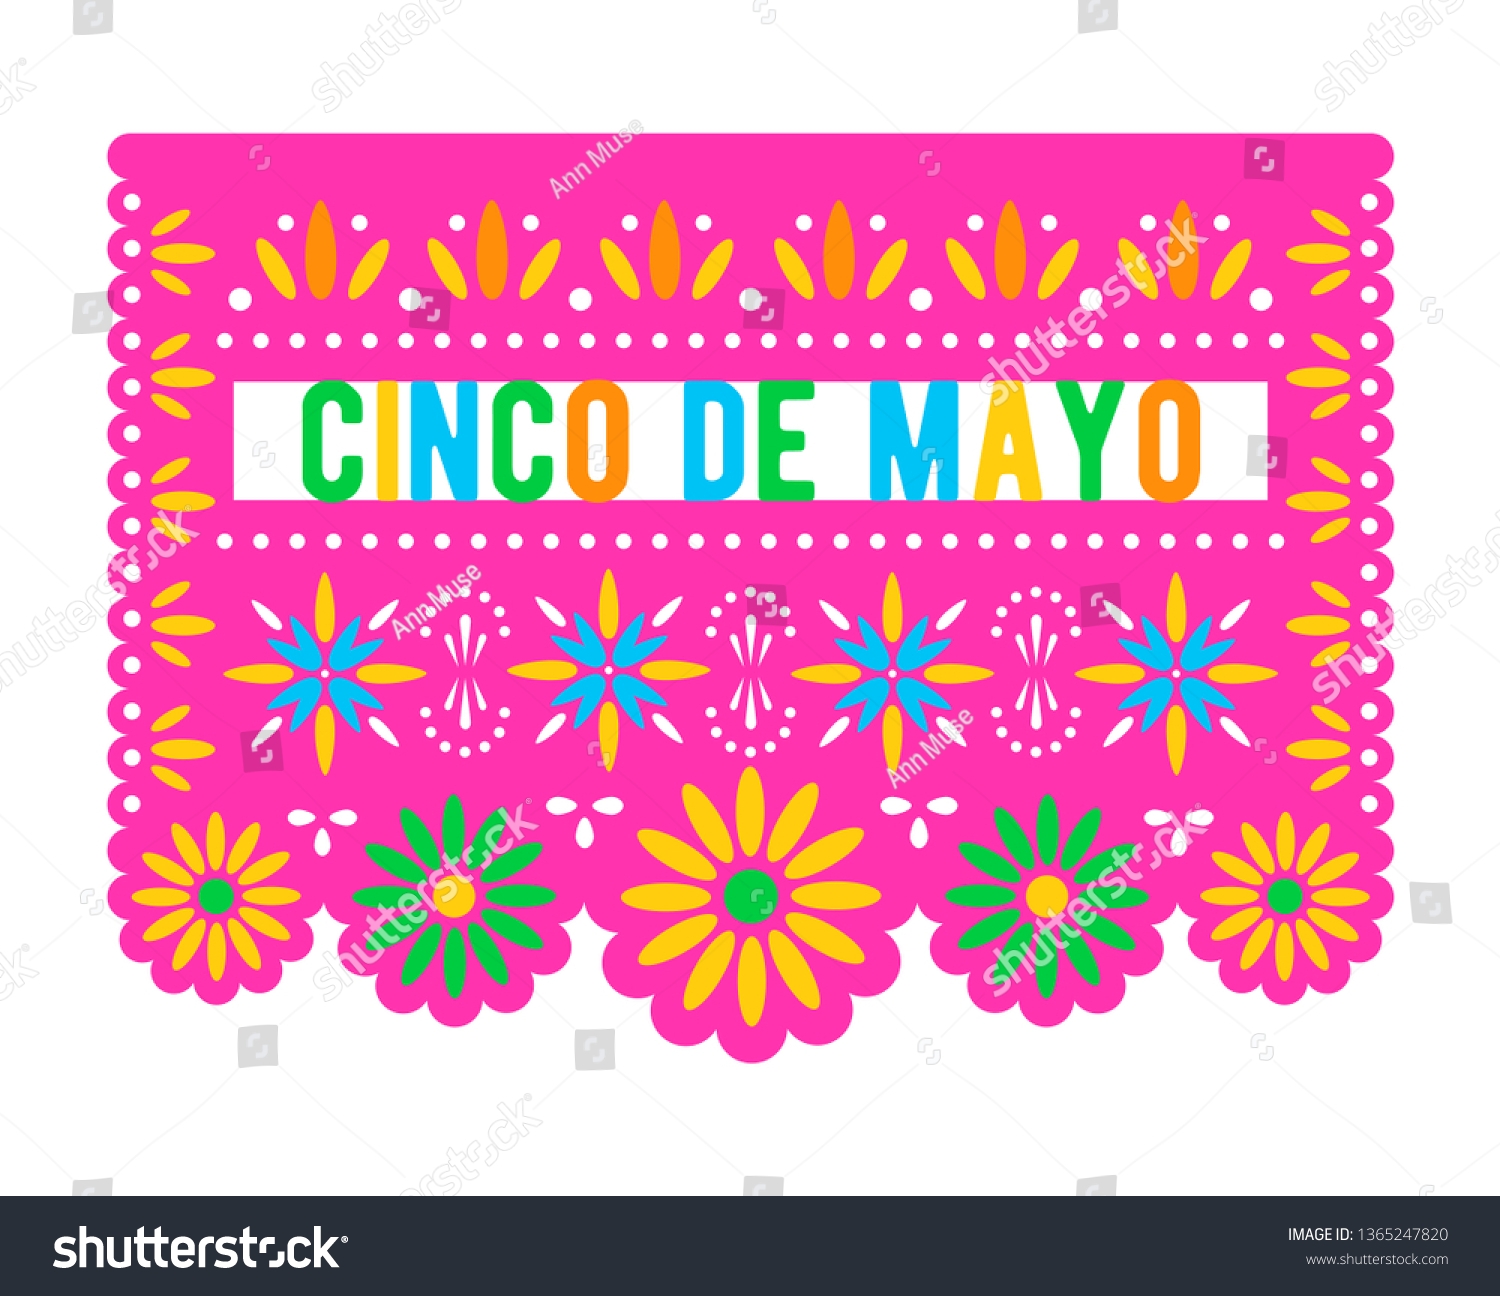 Cinco De Mayo Papel Picado Banner Stock Vector Royalty Free 1365247820 Shutterstock